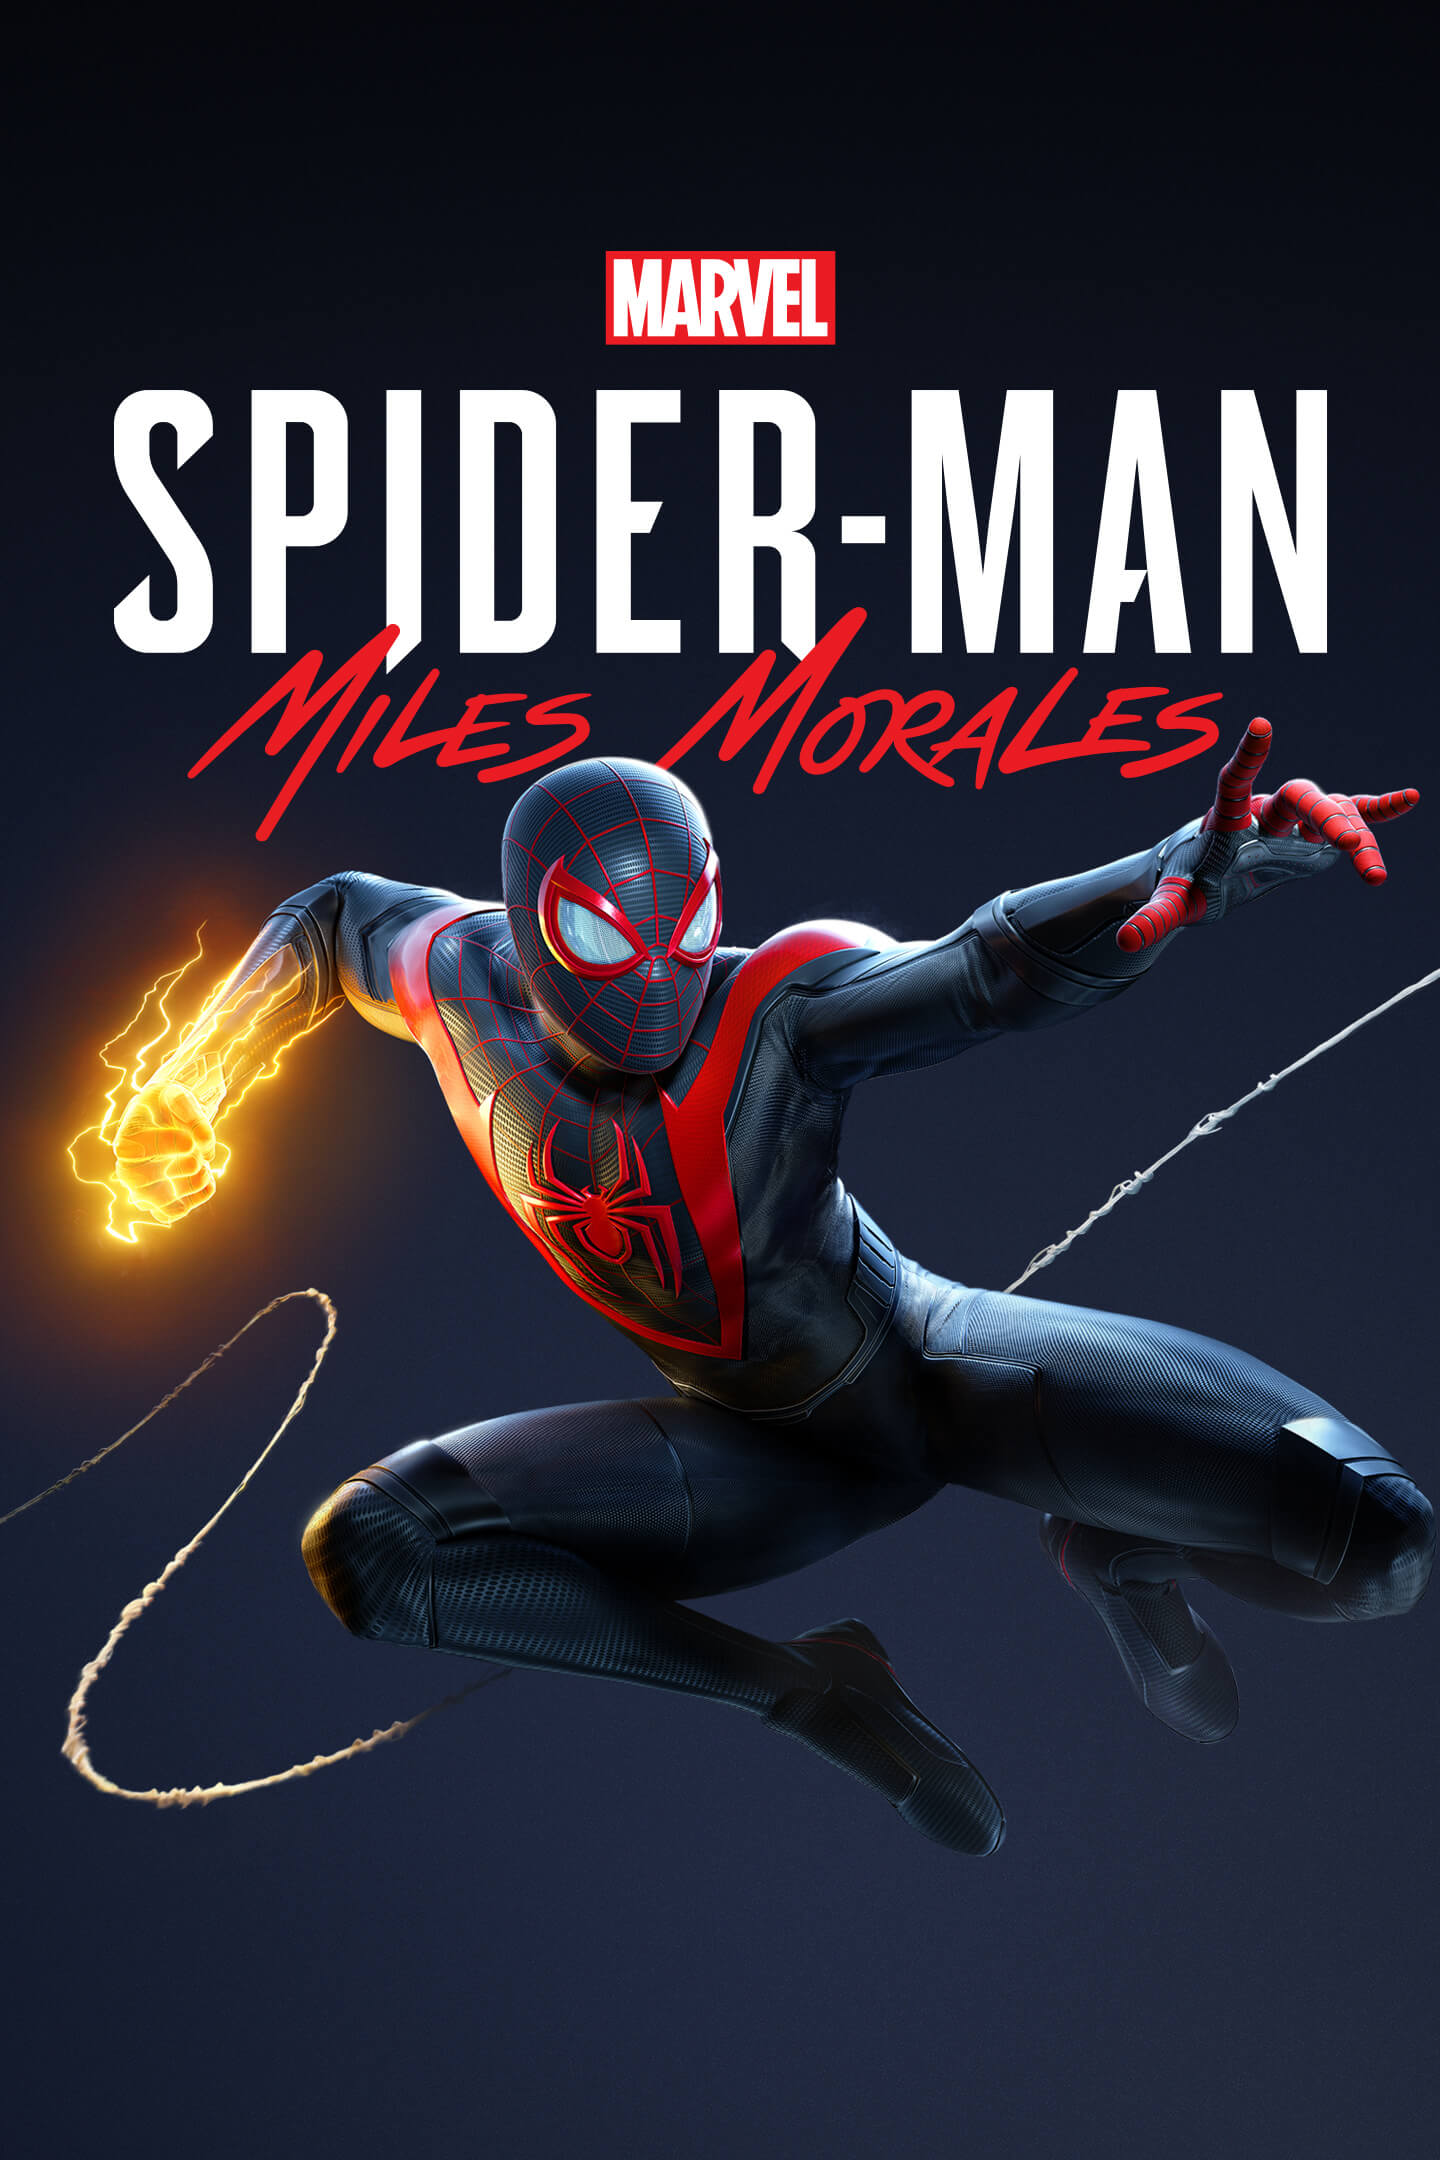 Marvel's Spider-Man: Miles Morales - PS4 ve PS5 Oyunları | PlayStation